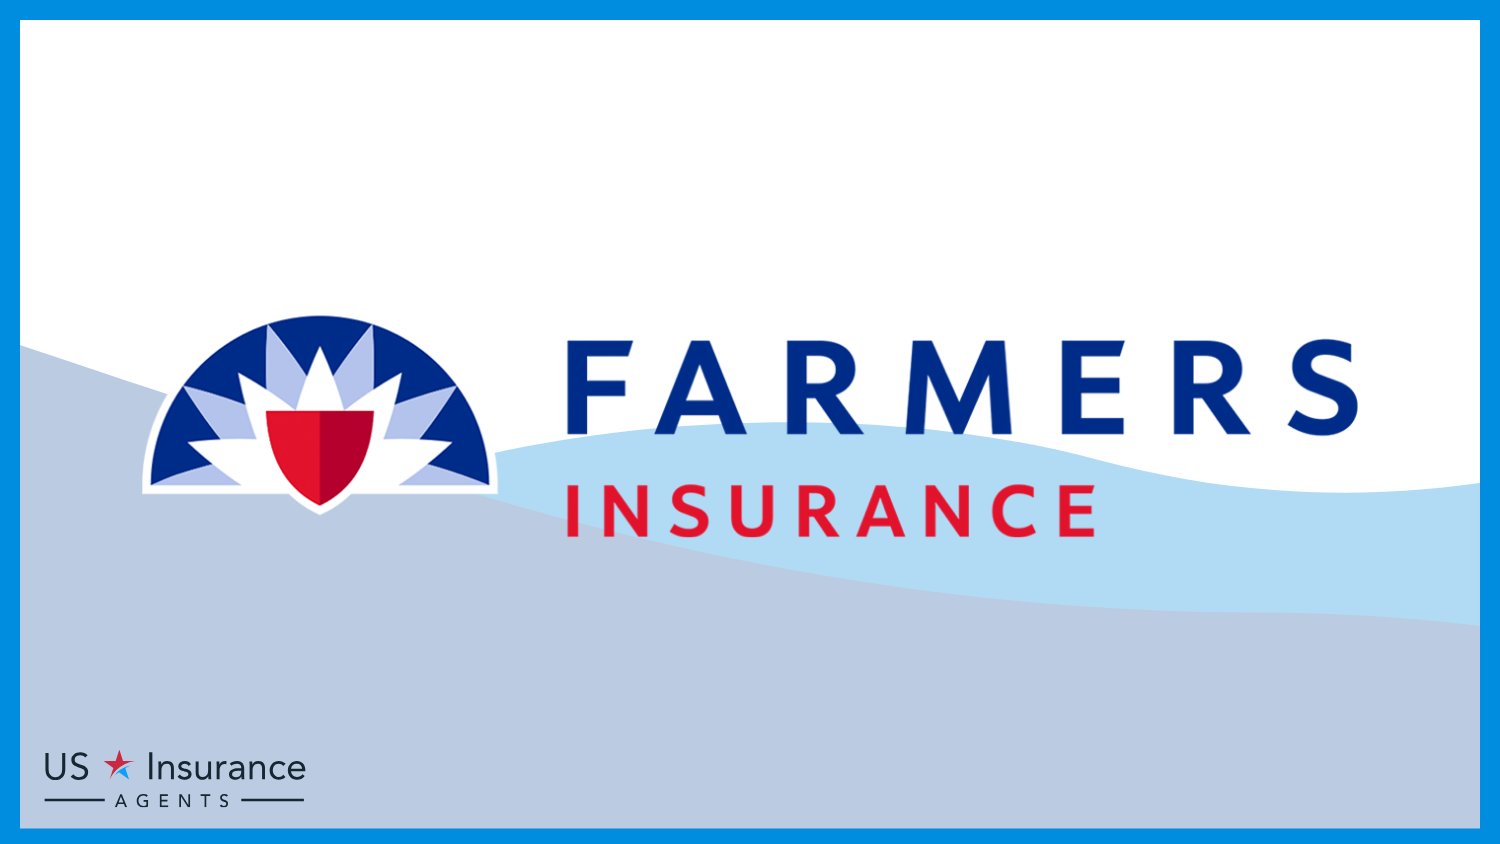 Best Homeowners Insurance for Older Homes: Farmers Insurance